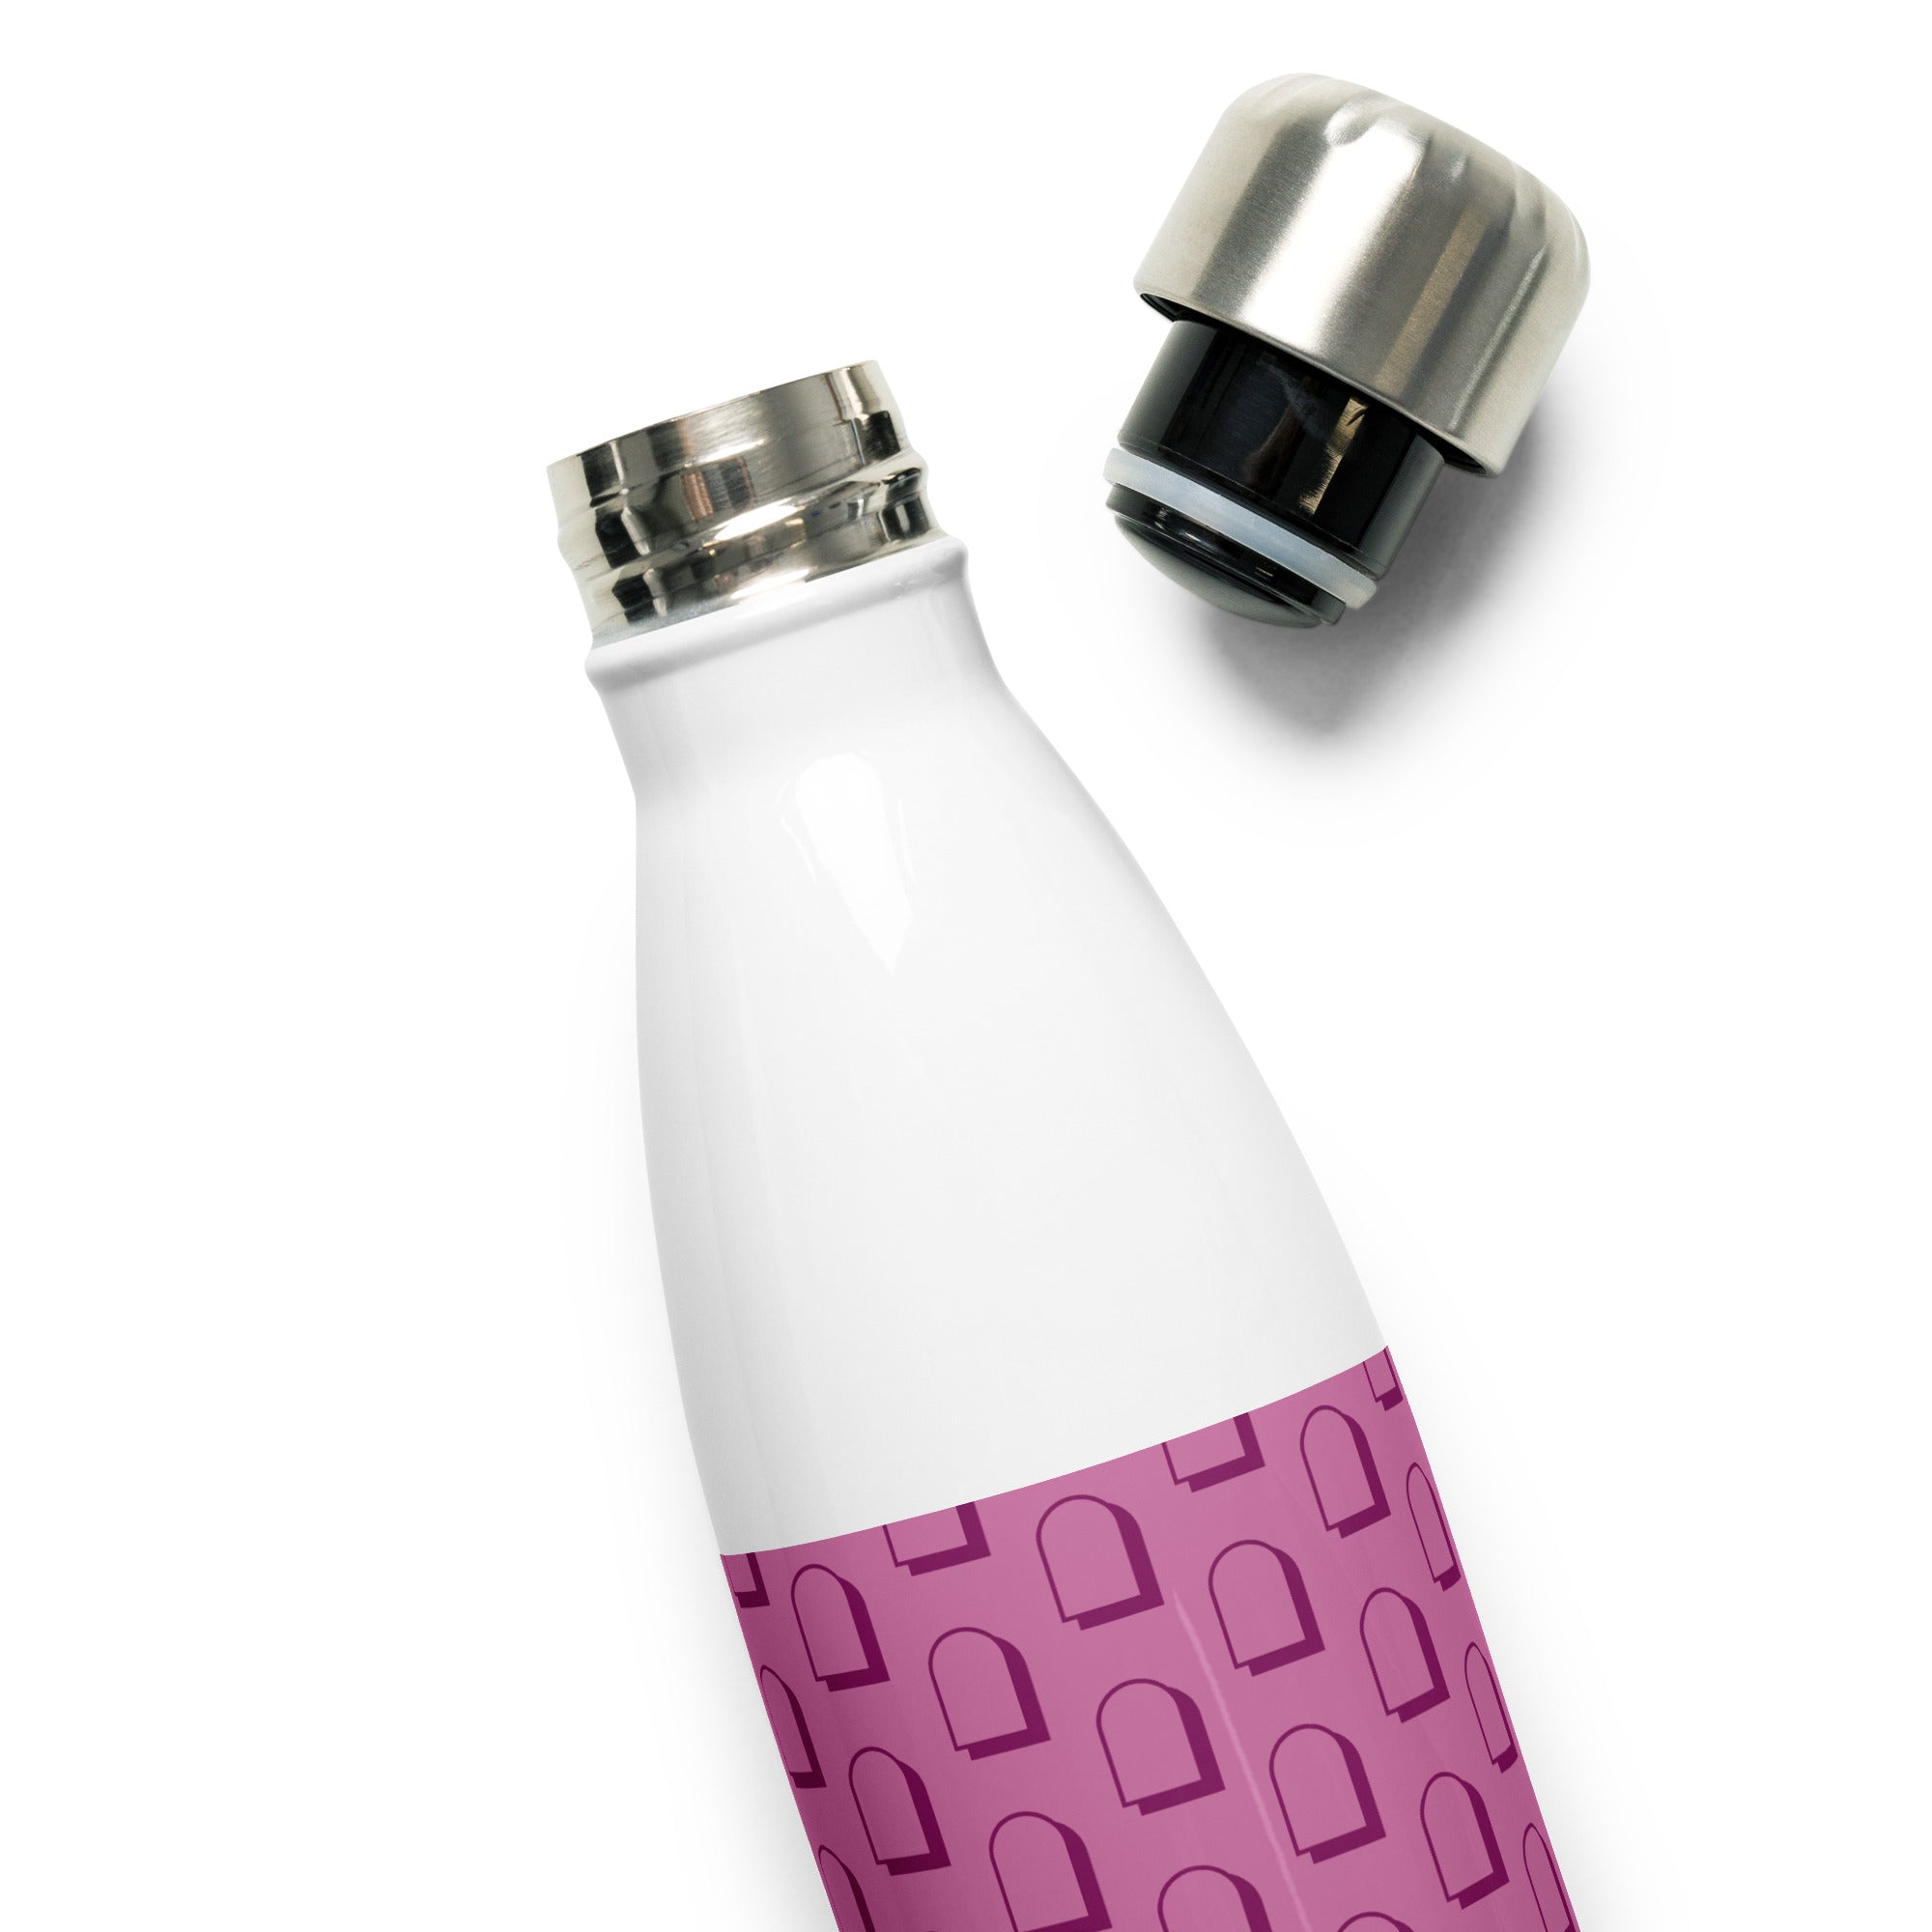 Wow Pink - Water Bottle